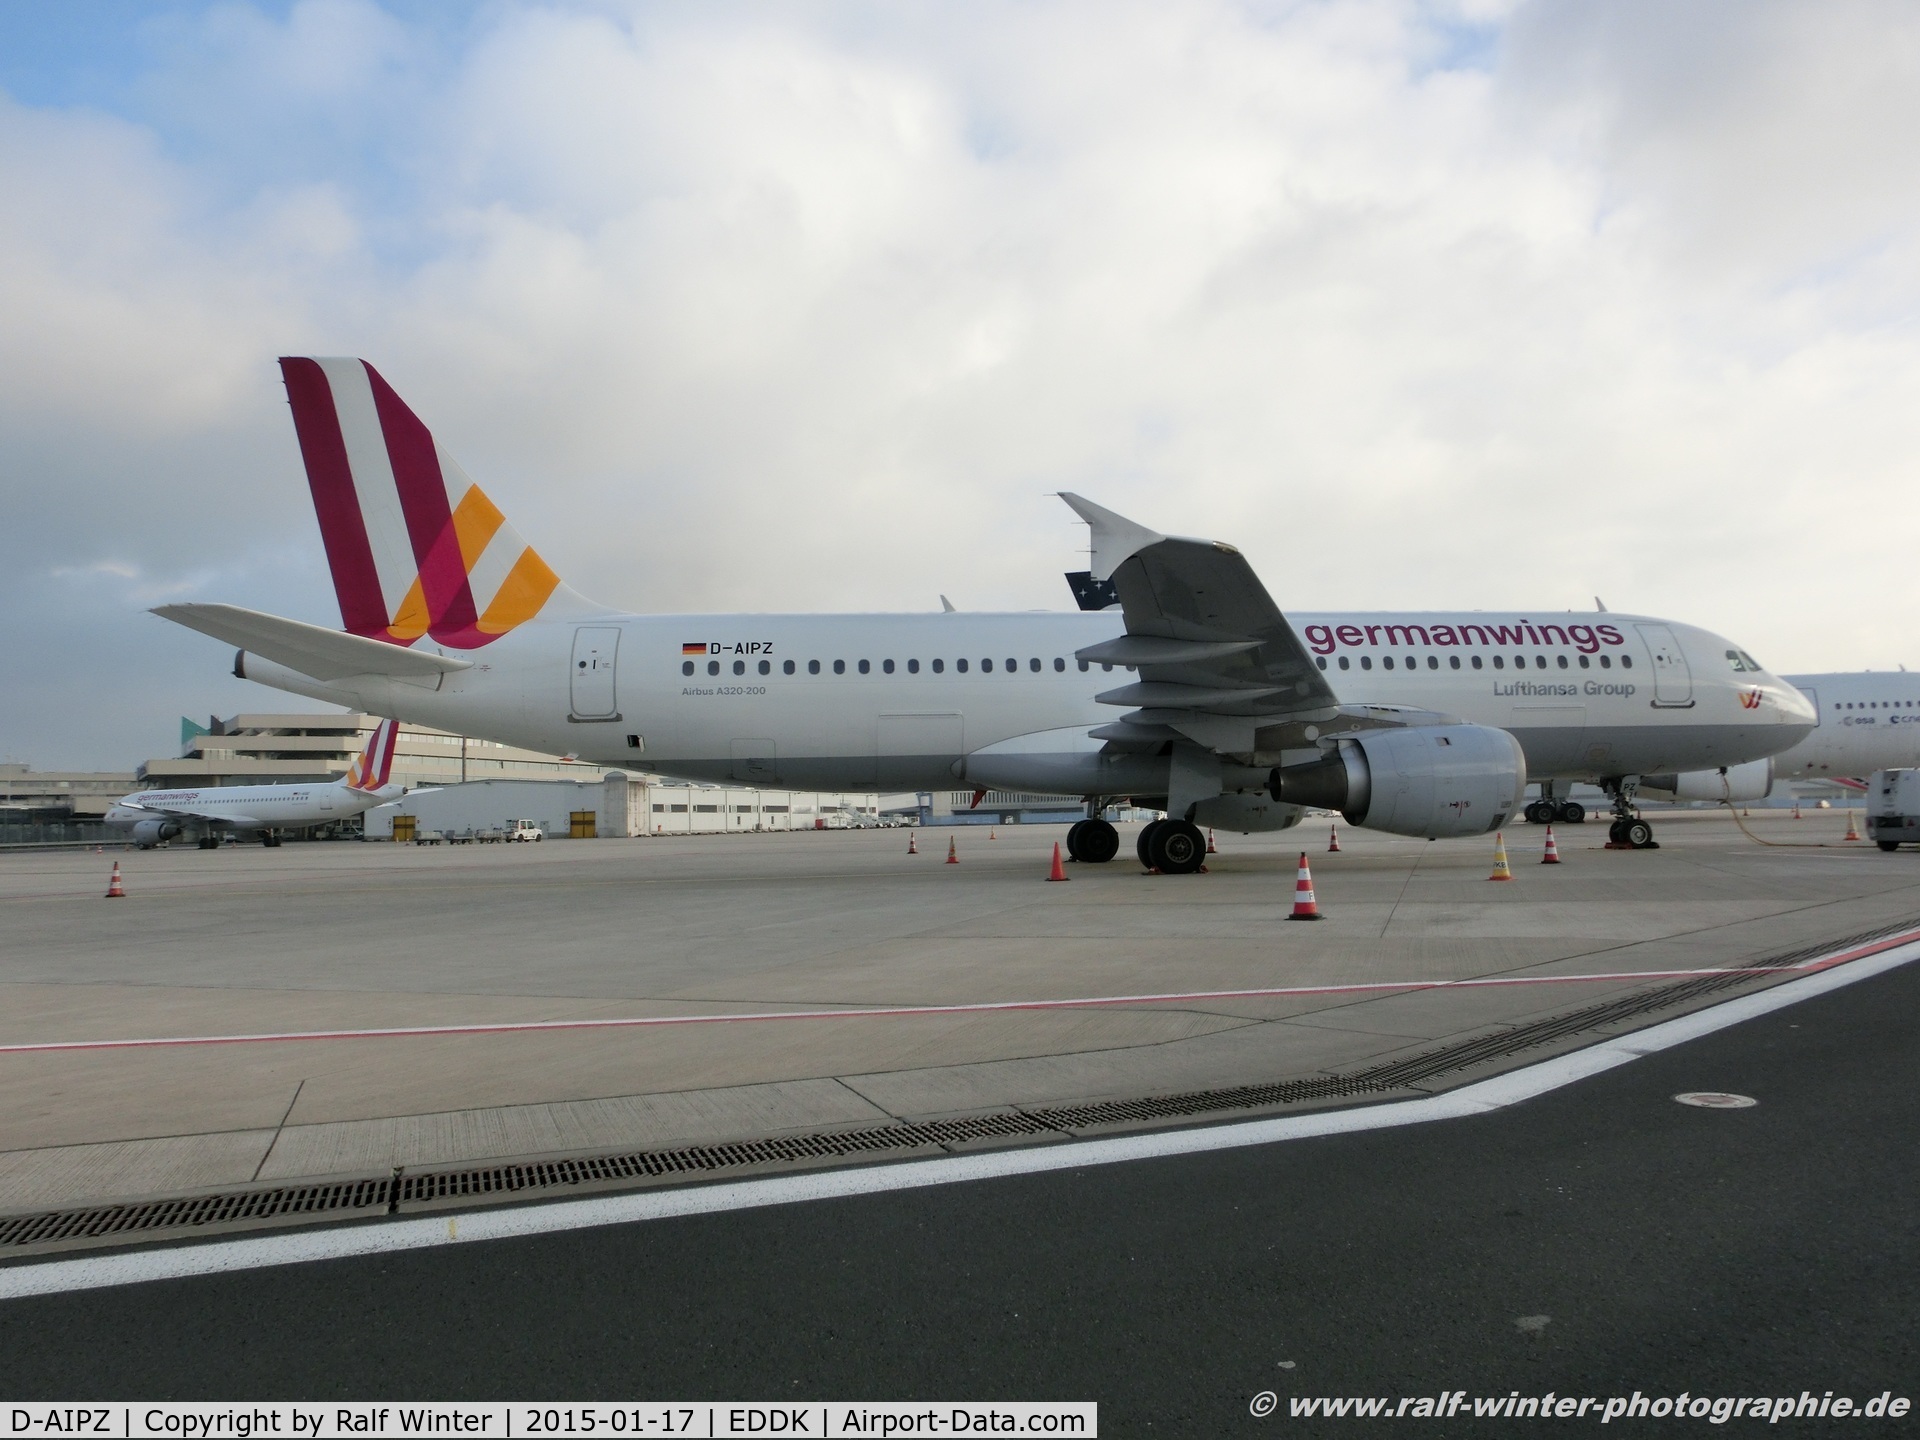 D-AIPZ, 1991 Airbus A320-211 C/N 162, Airbus A320-211 - 4u GWI Germanwings ex Lufthansa 'Erfurt' - 162 - D-AIPZ - 17.01.2015 - CGN